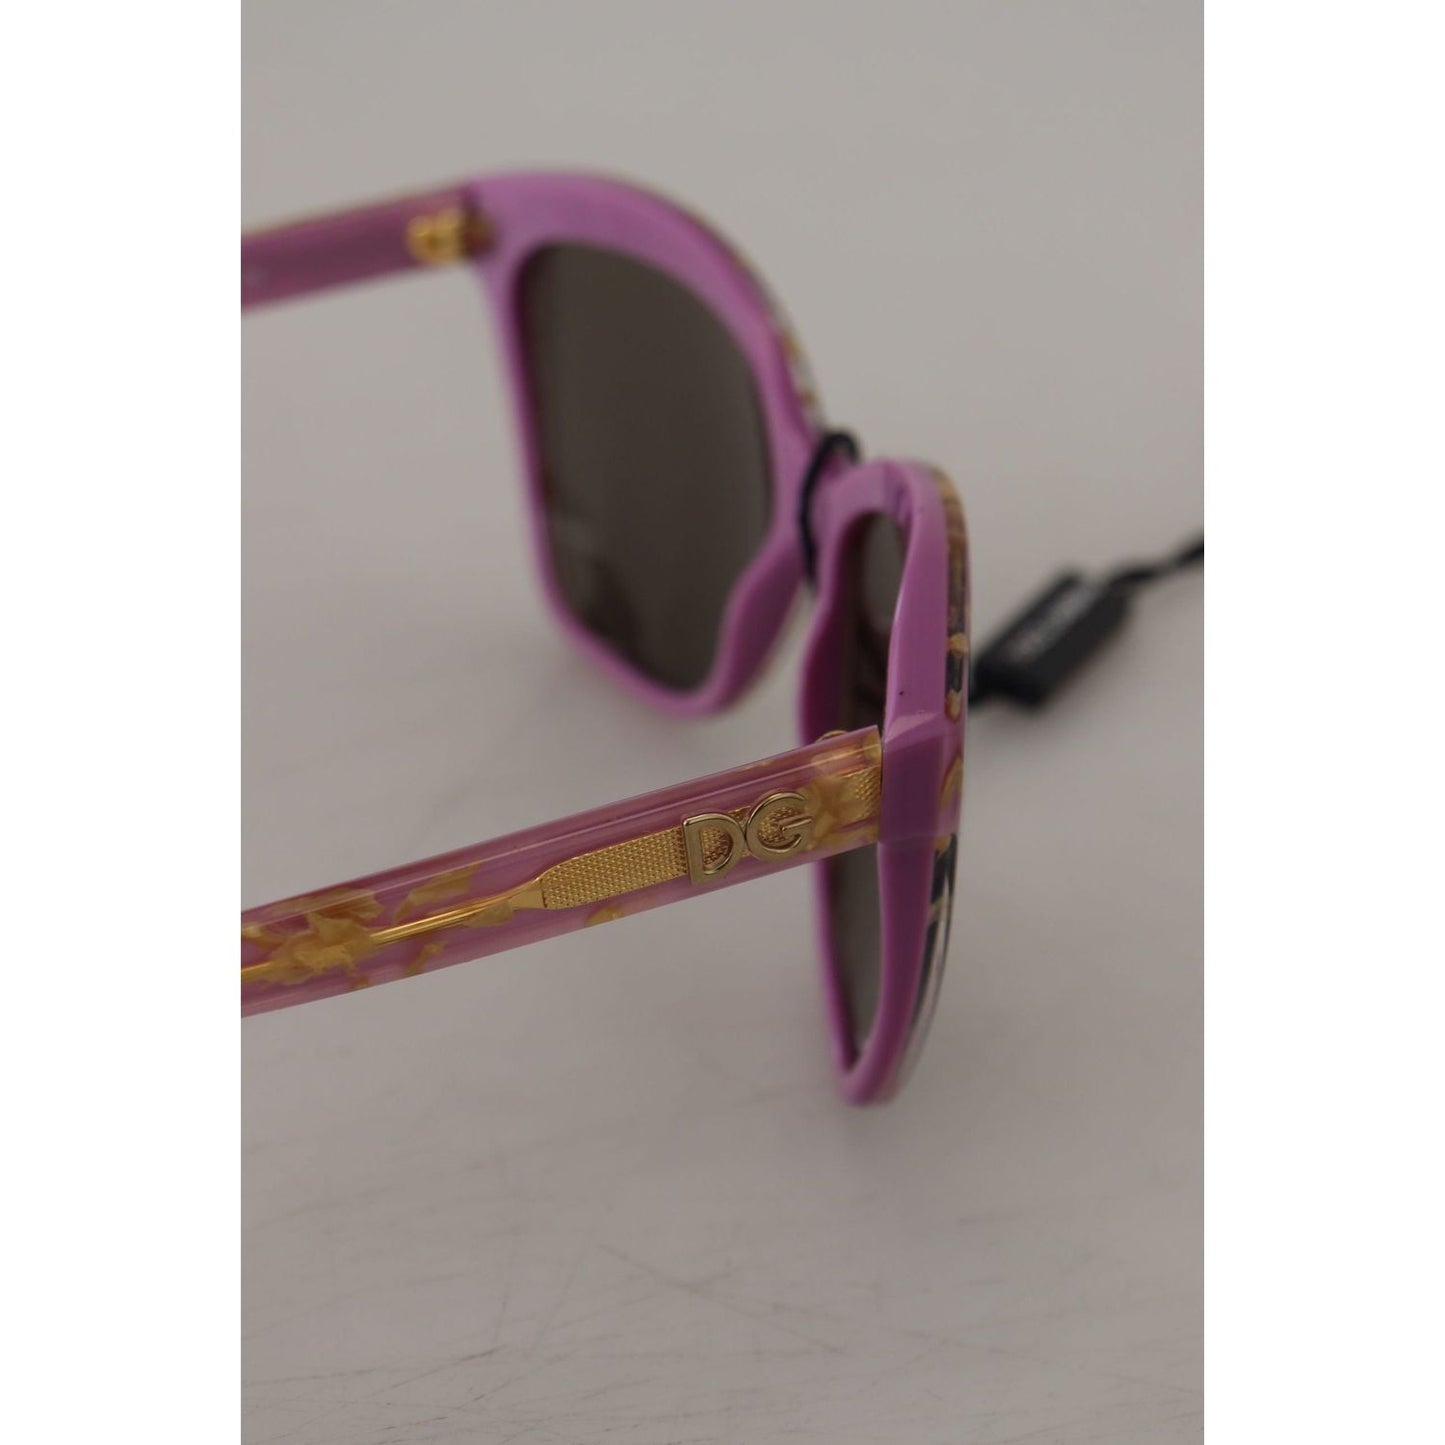 Dolce & Gabbana Elegant Violet Acetate Sunglasses violet-full-rim-rectangle-frame-shades-dg4251-sunglasses IMG_5191-scaled-38cc94a2-acc.jpg